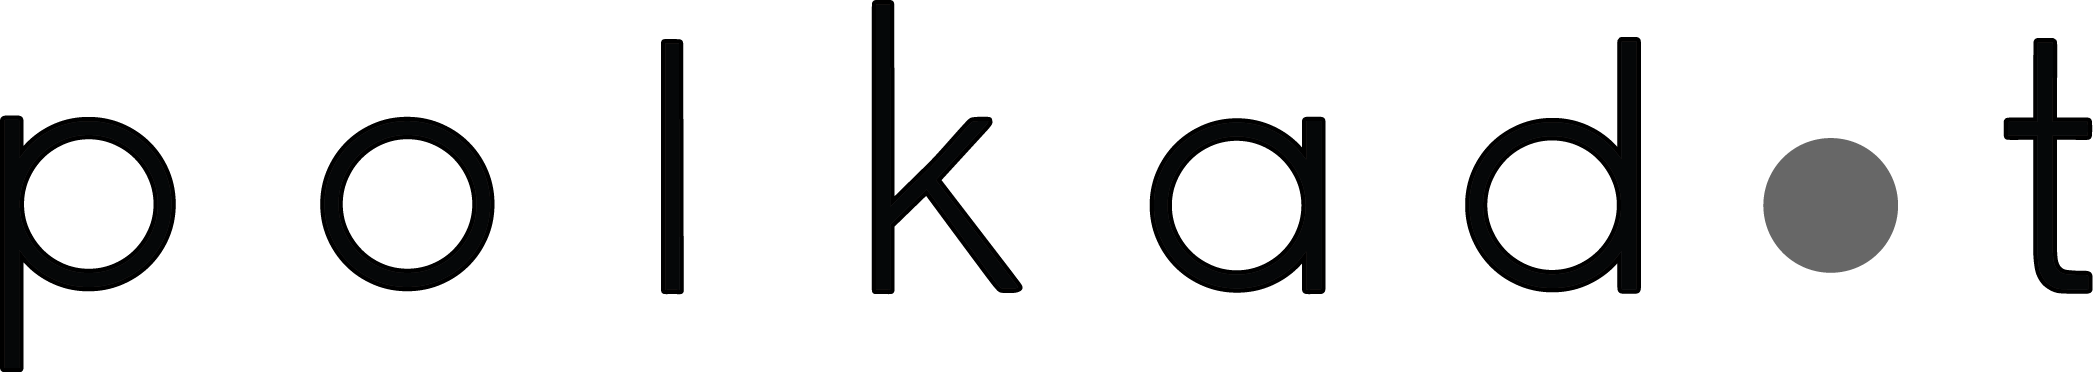 polkadot productions logo 